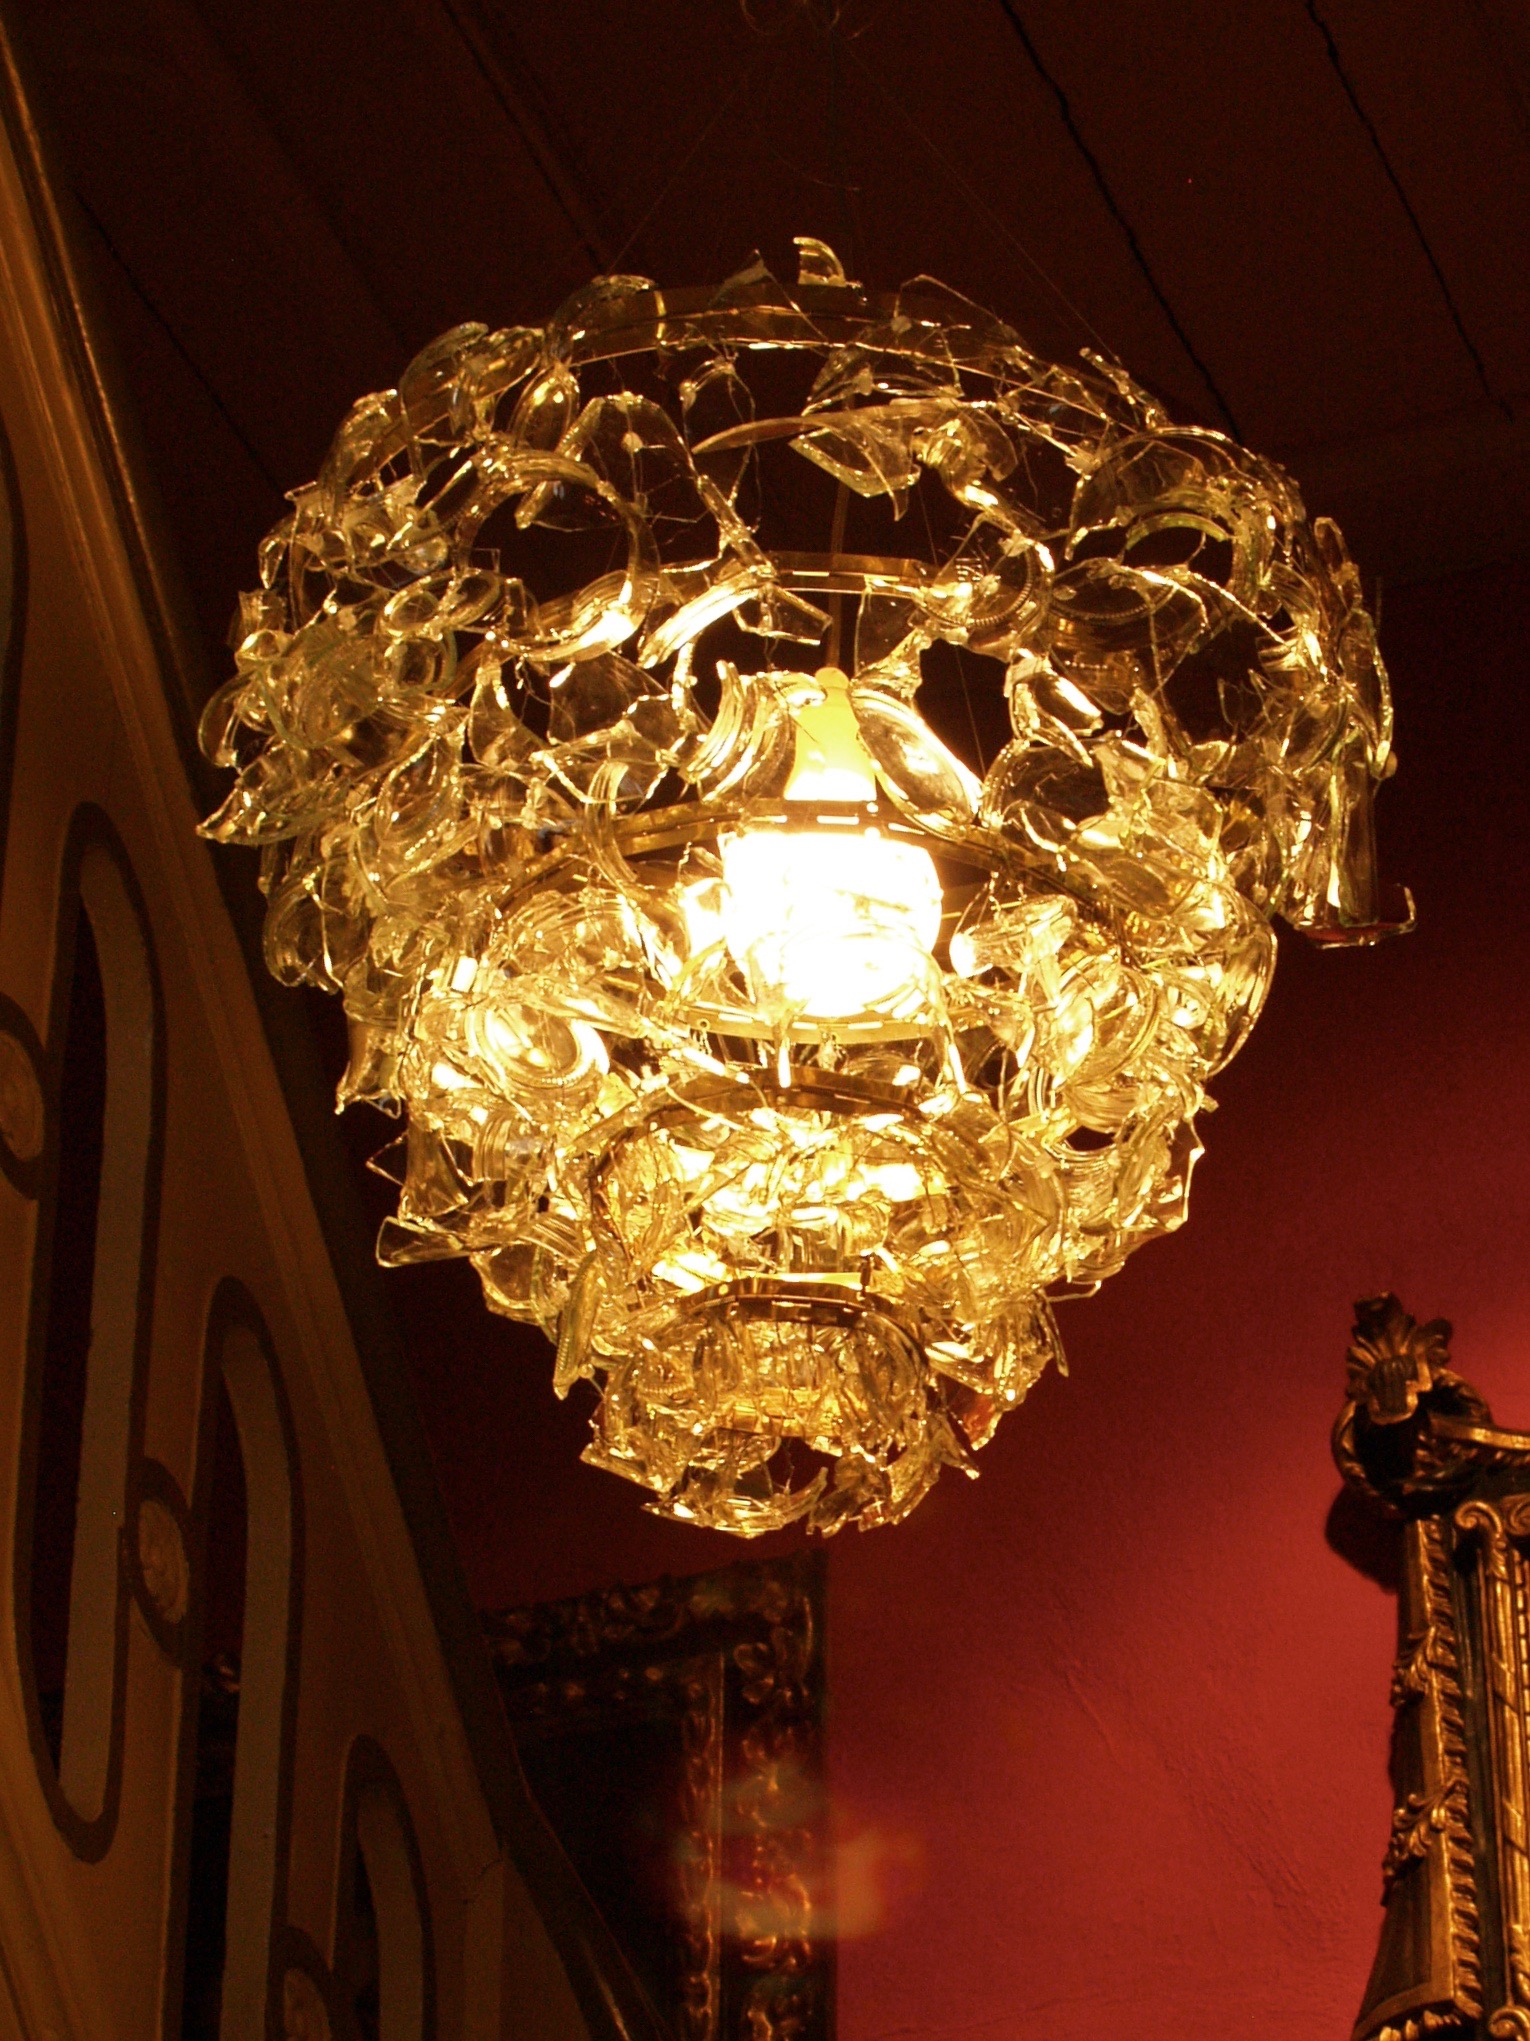 Large chandelier made of broken glass